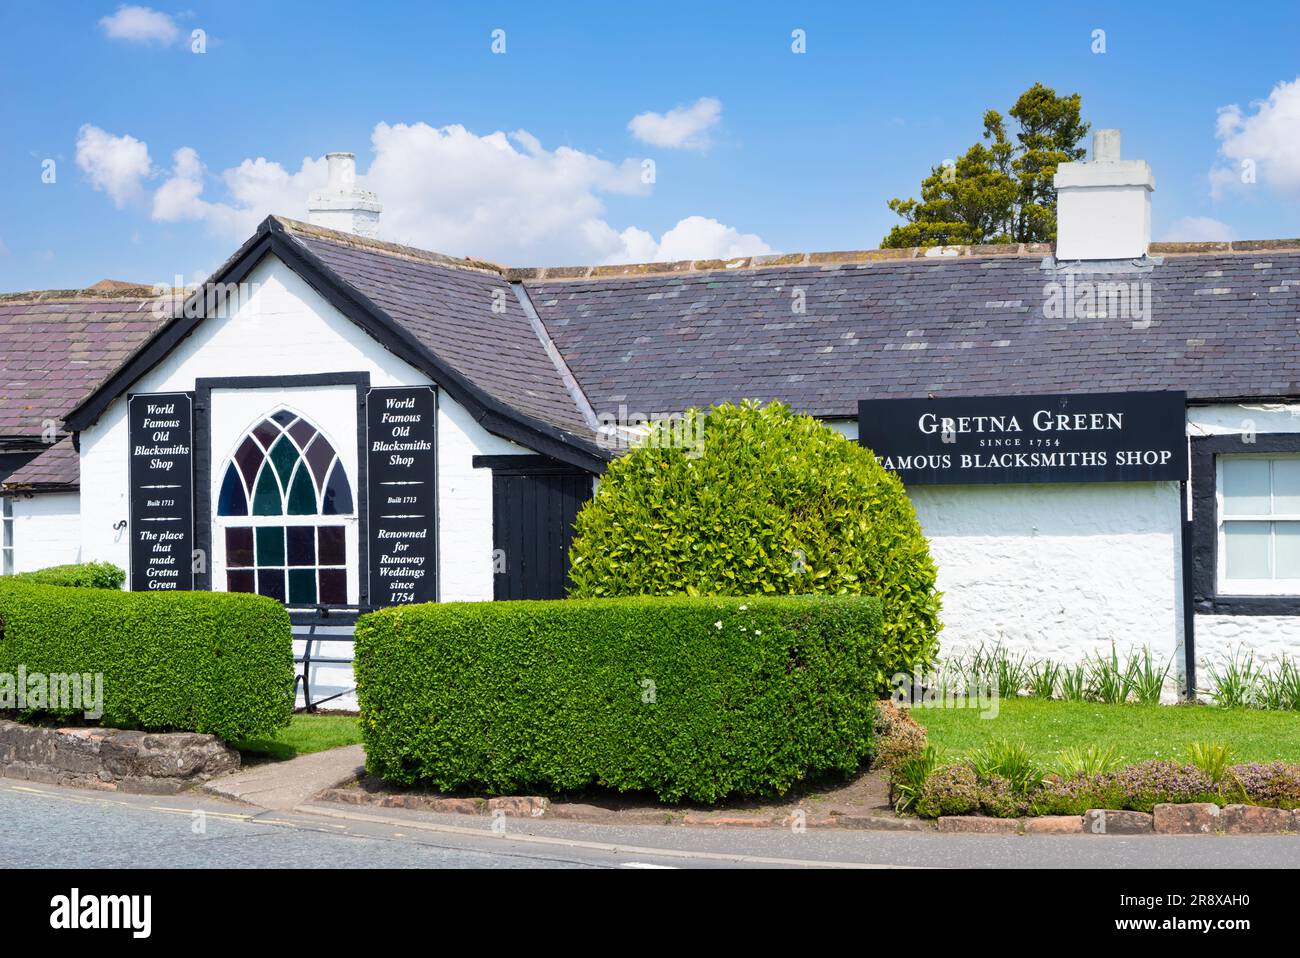 Gretna Green Famous Blacksmiths shop wedding venue in Gretna Green Dumfries and Galloway Scotland UK GB Europe Stock Photo